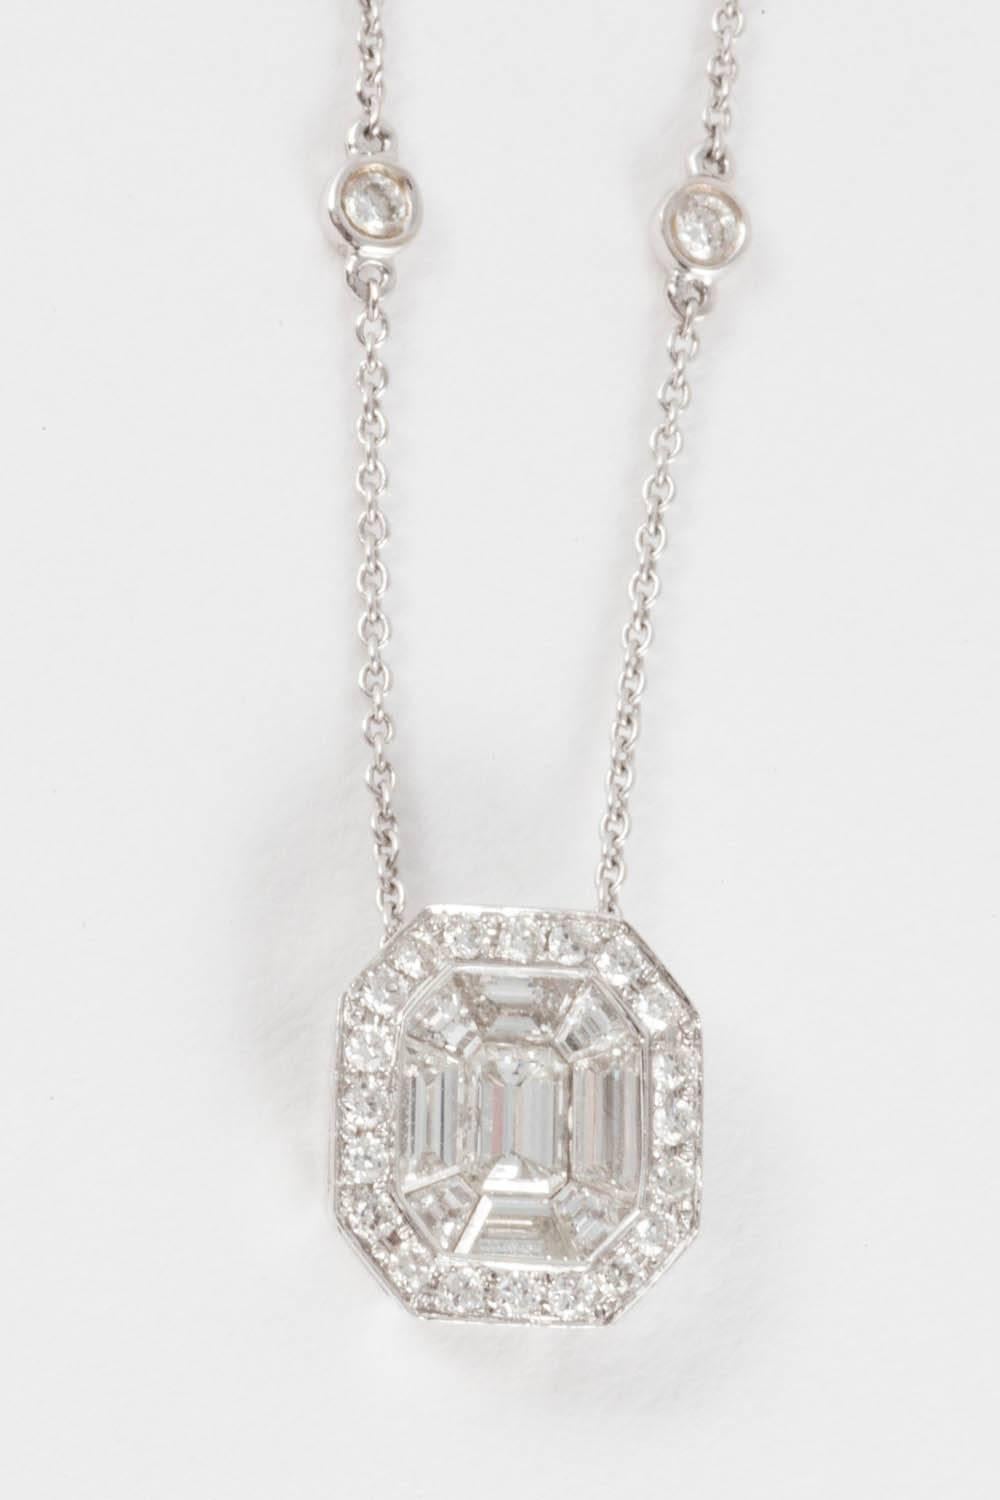 Art Deco Style Cut Cornered Emerald Cut Style Diamond Pendant in 18ct White Gold For Sale 1